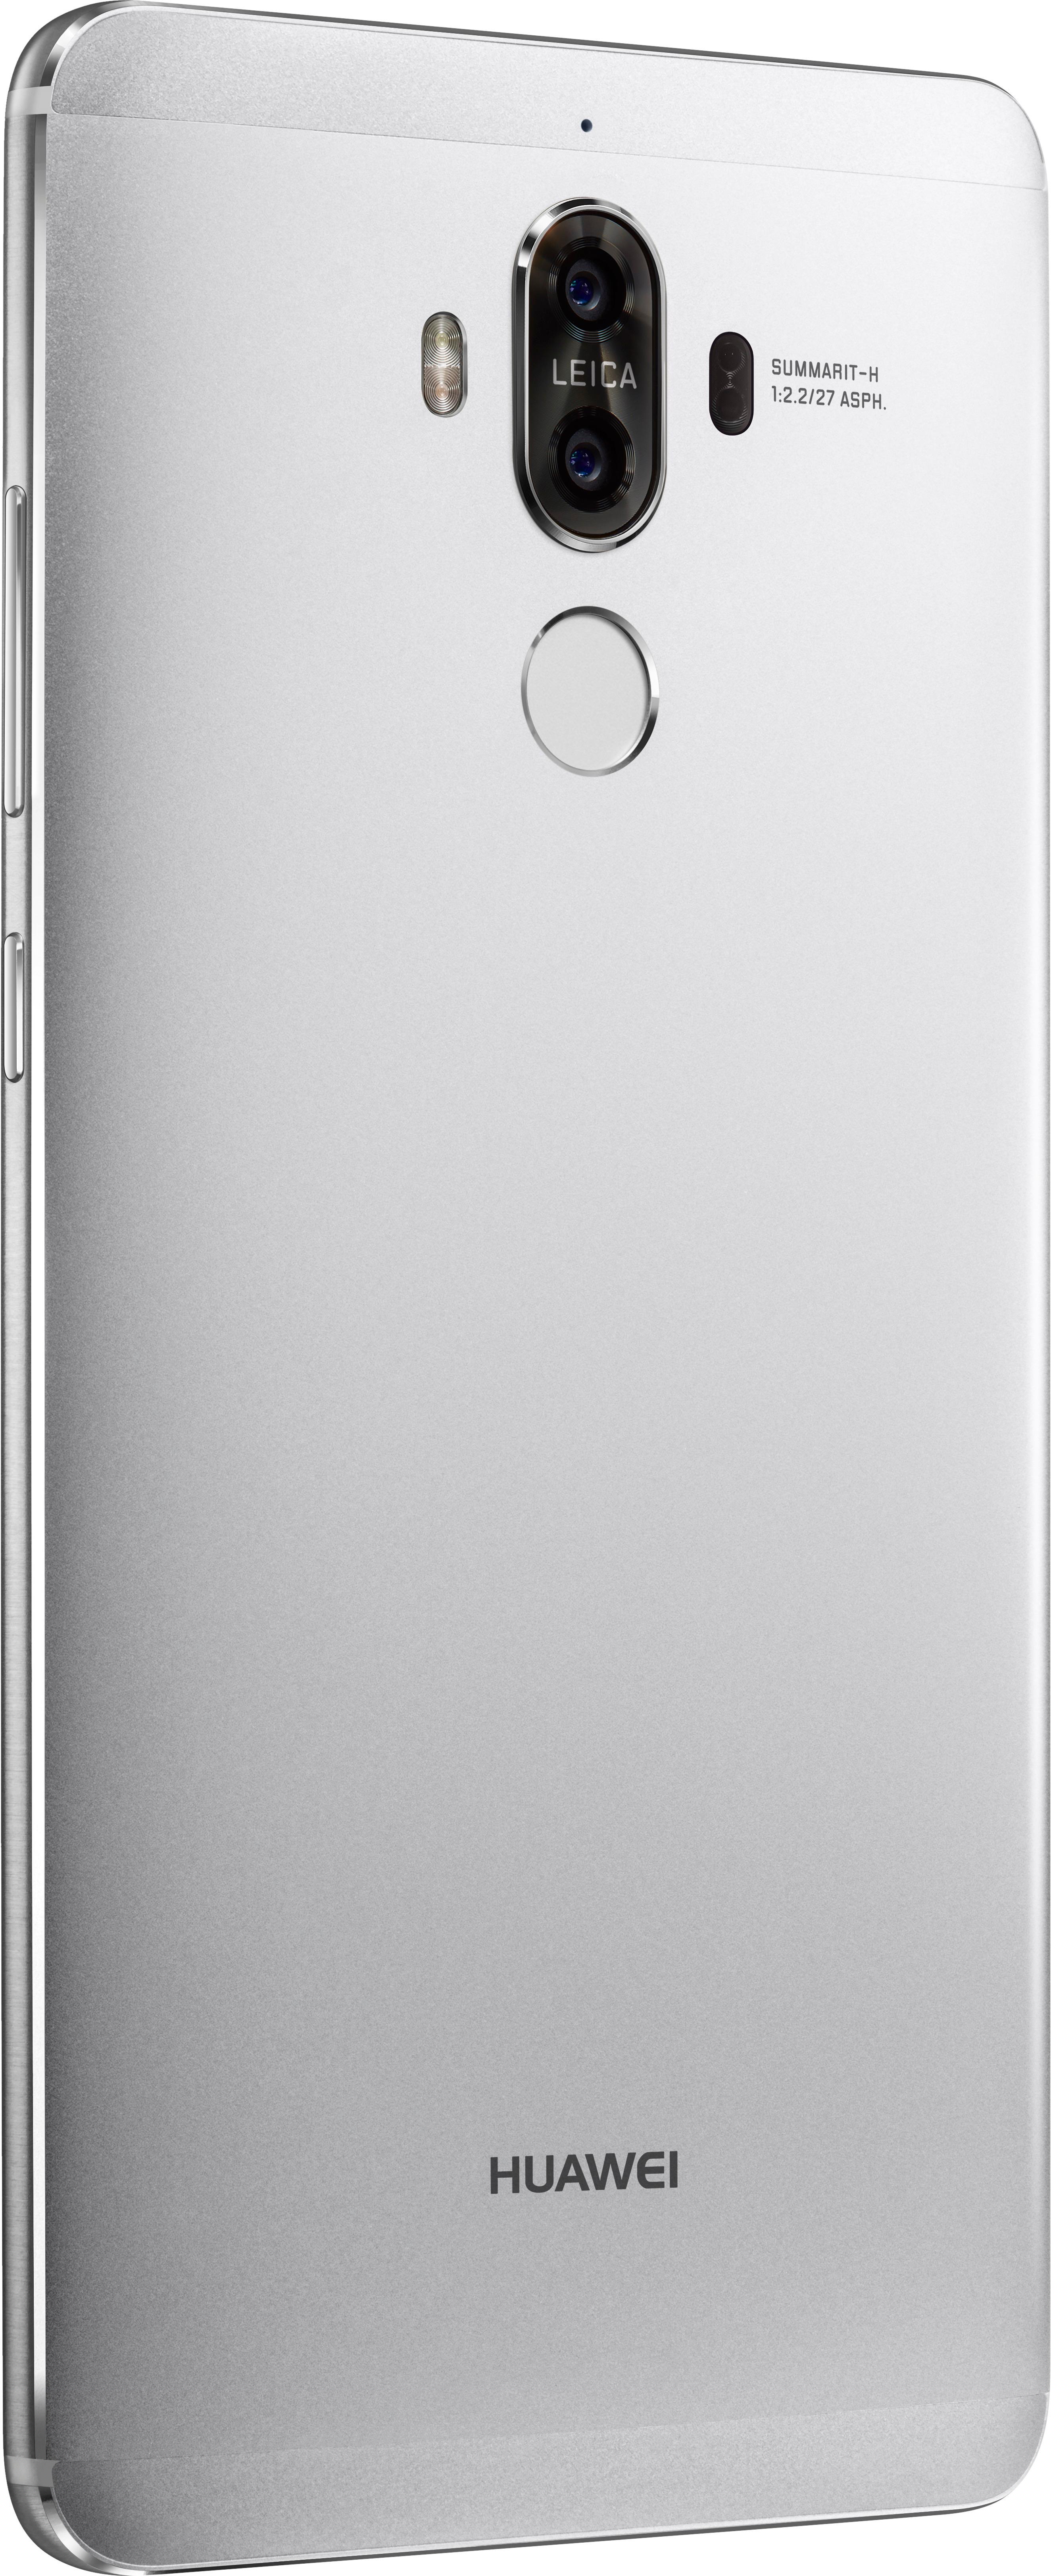 Tahití vender Espacio cibernético Best Buy: Huawei Geek Squad Certified Refurbished Mate 9 4G LTE with 64GB  Memory Cell Phone (Unlocked) Moonlight Silver GSRF MHA-L29